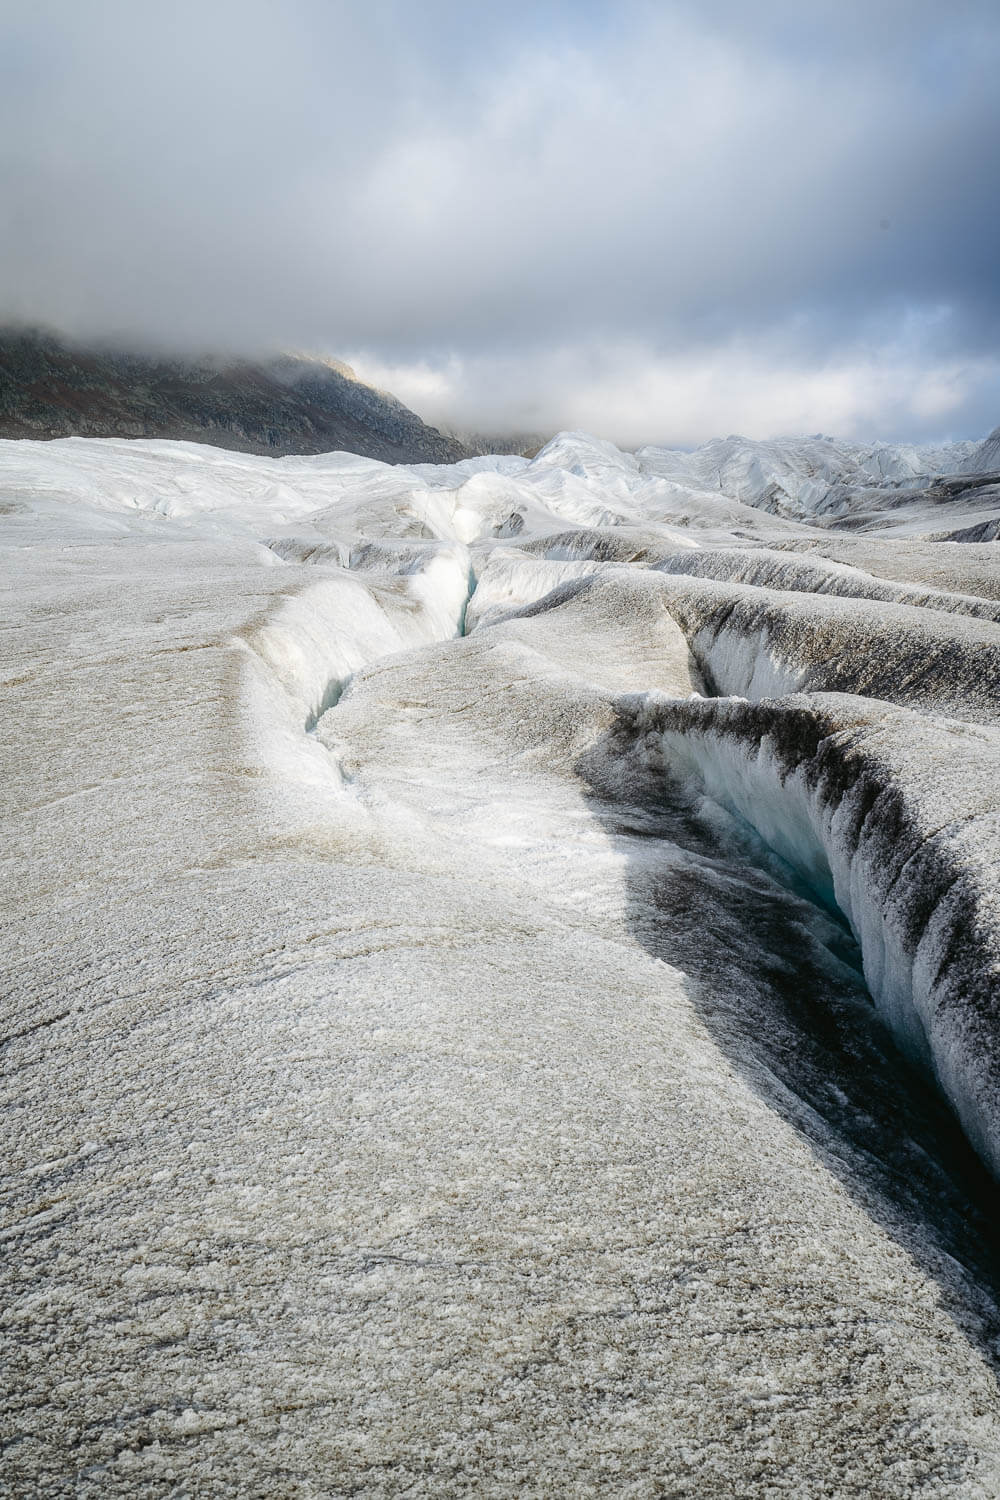 The crevasses of the Aletsch Glacier